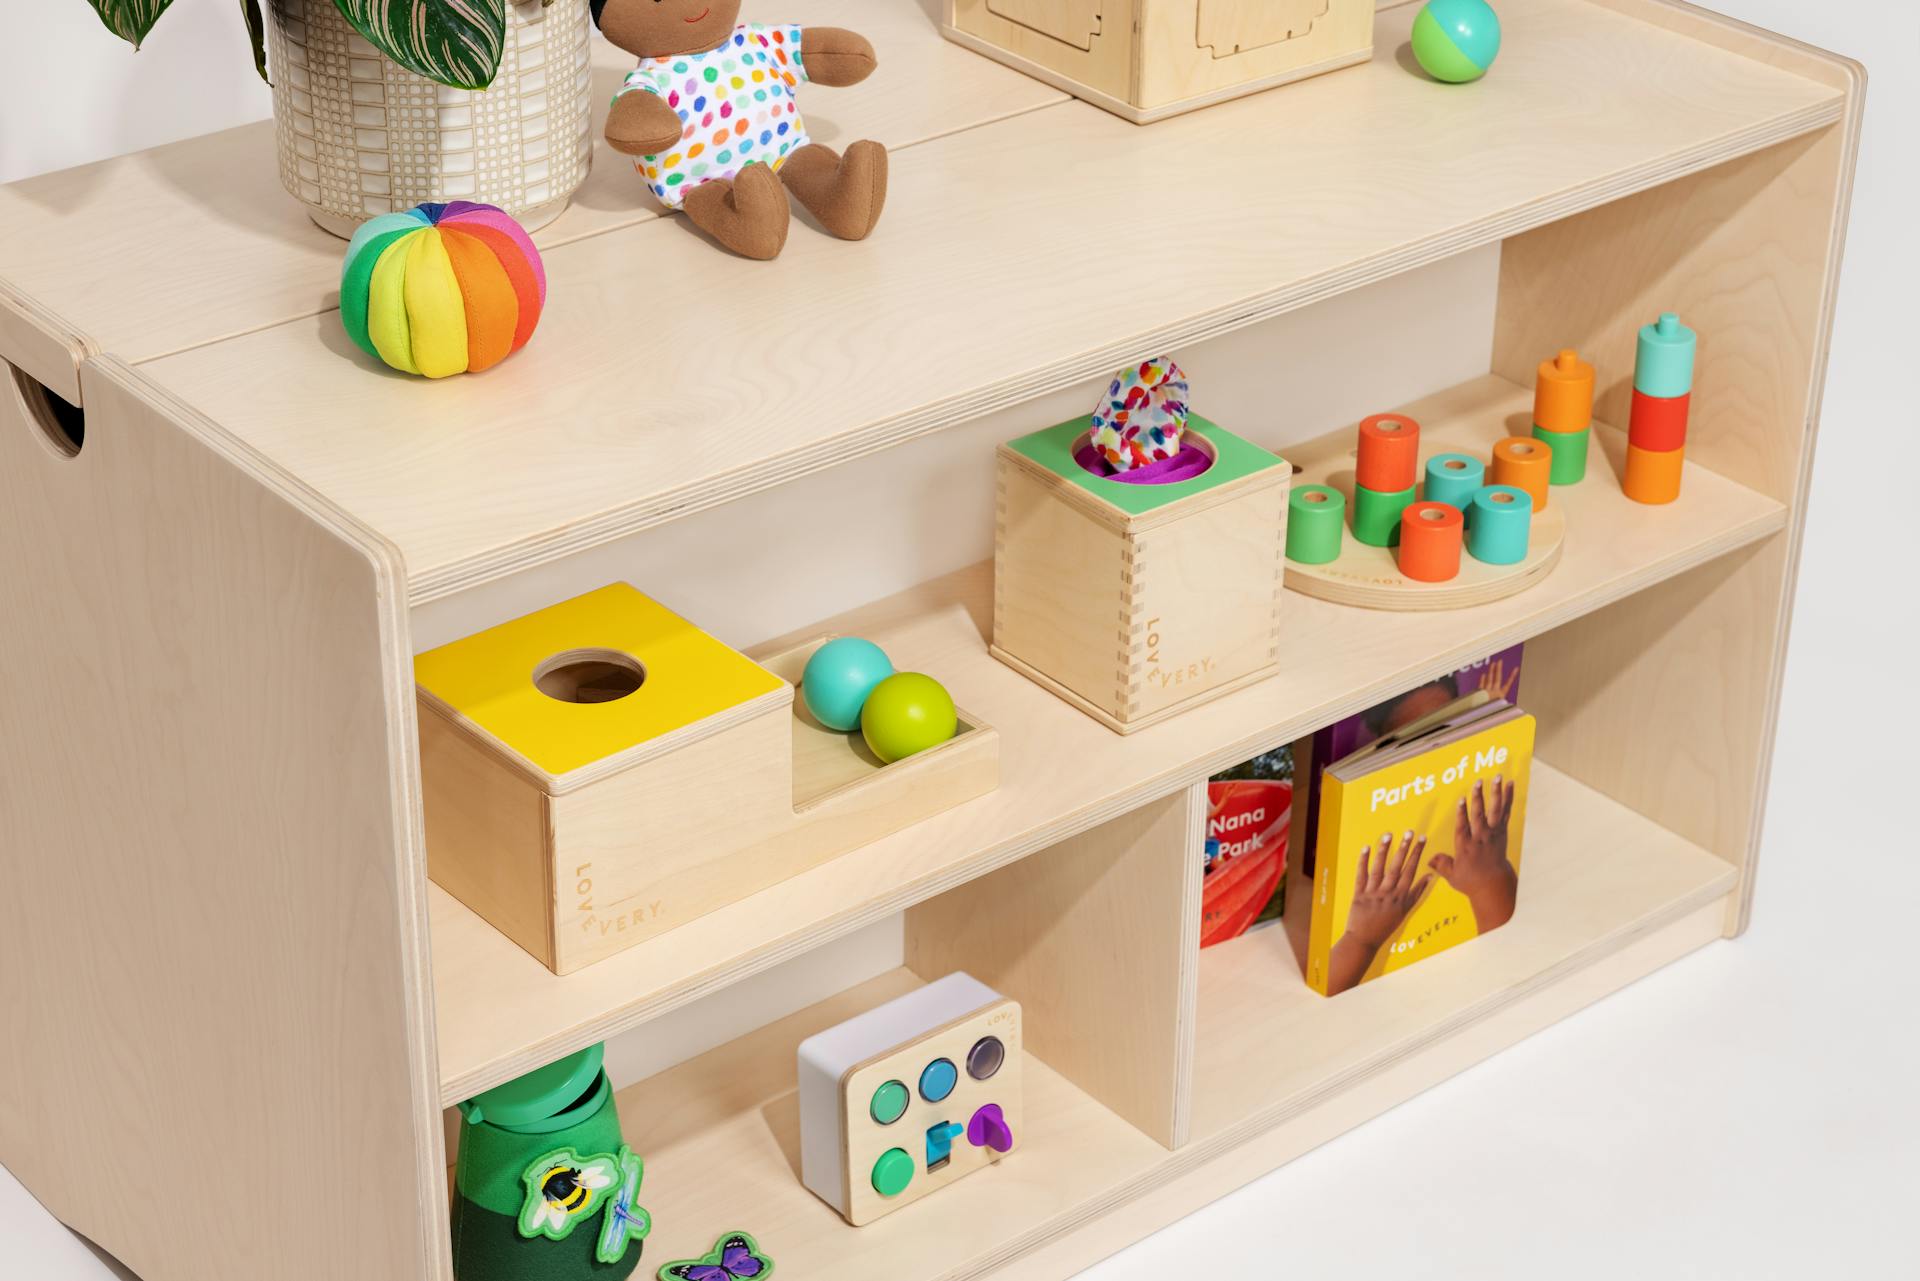 The Montessori Playshelf by Lovevery